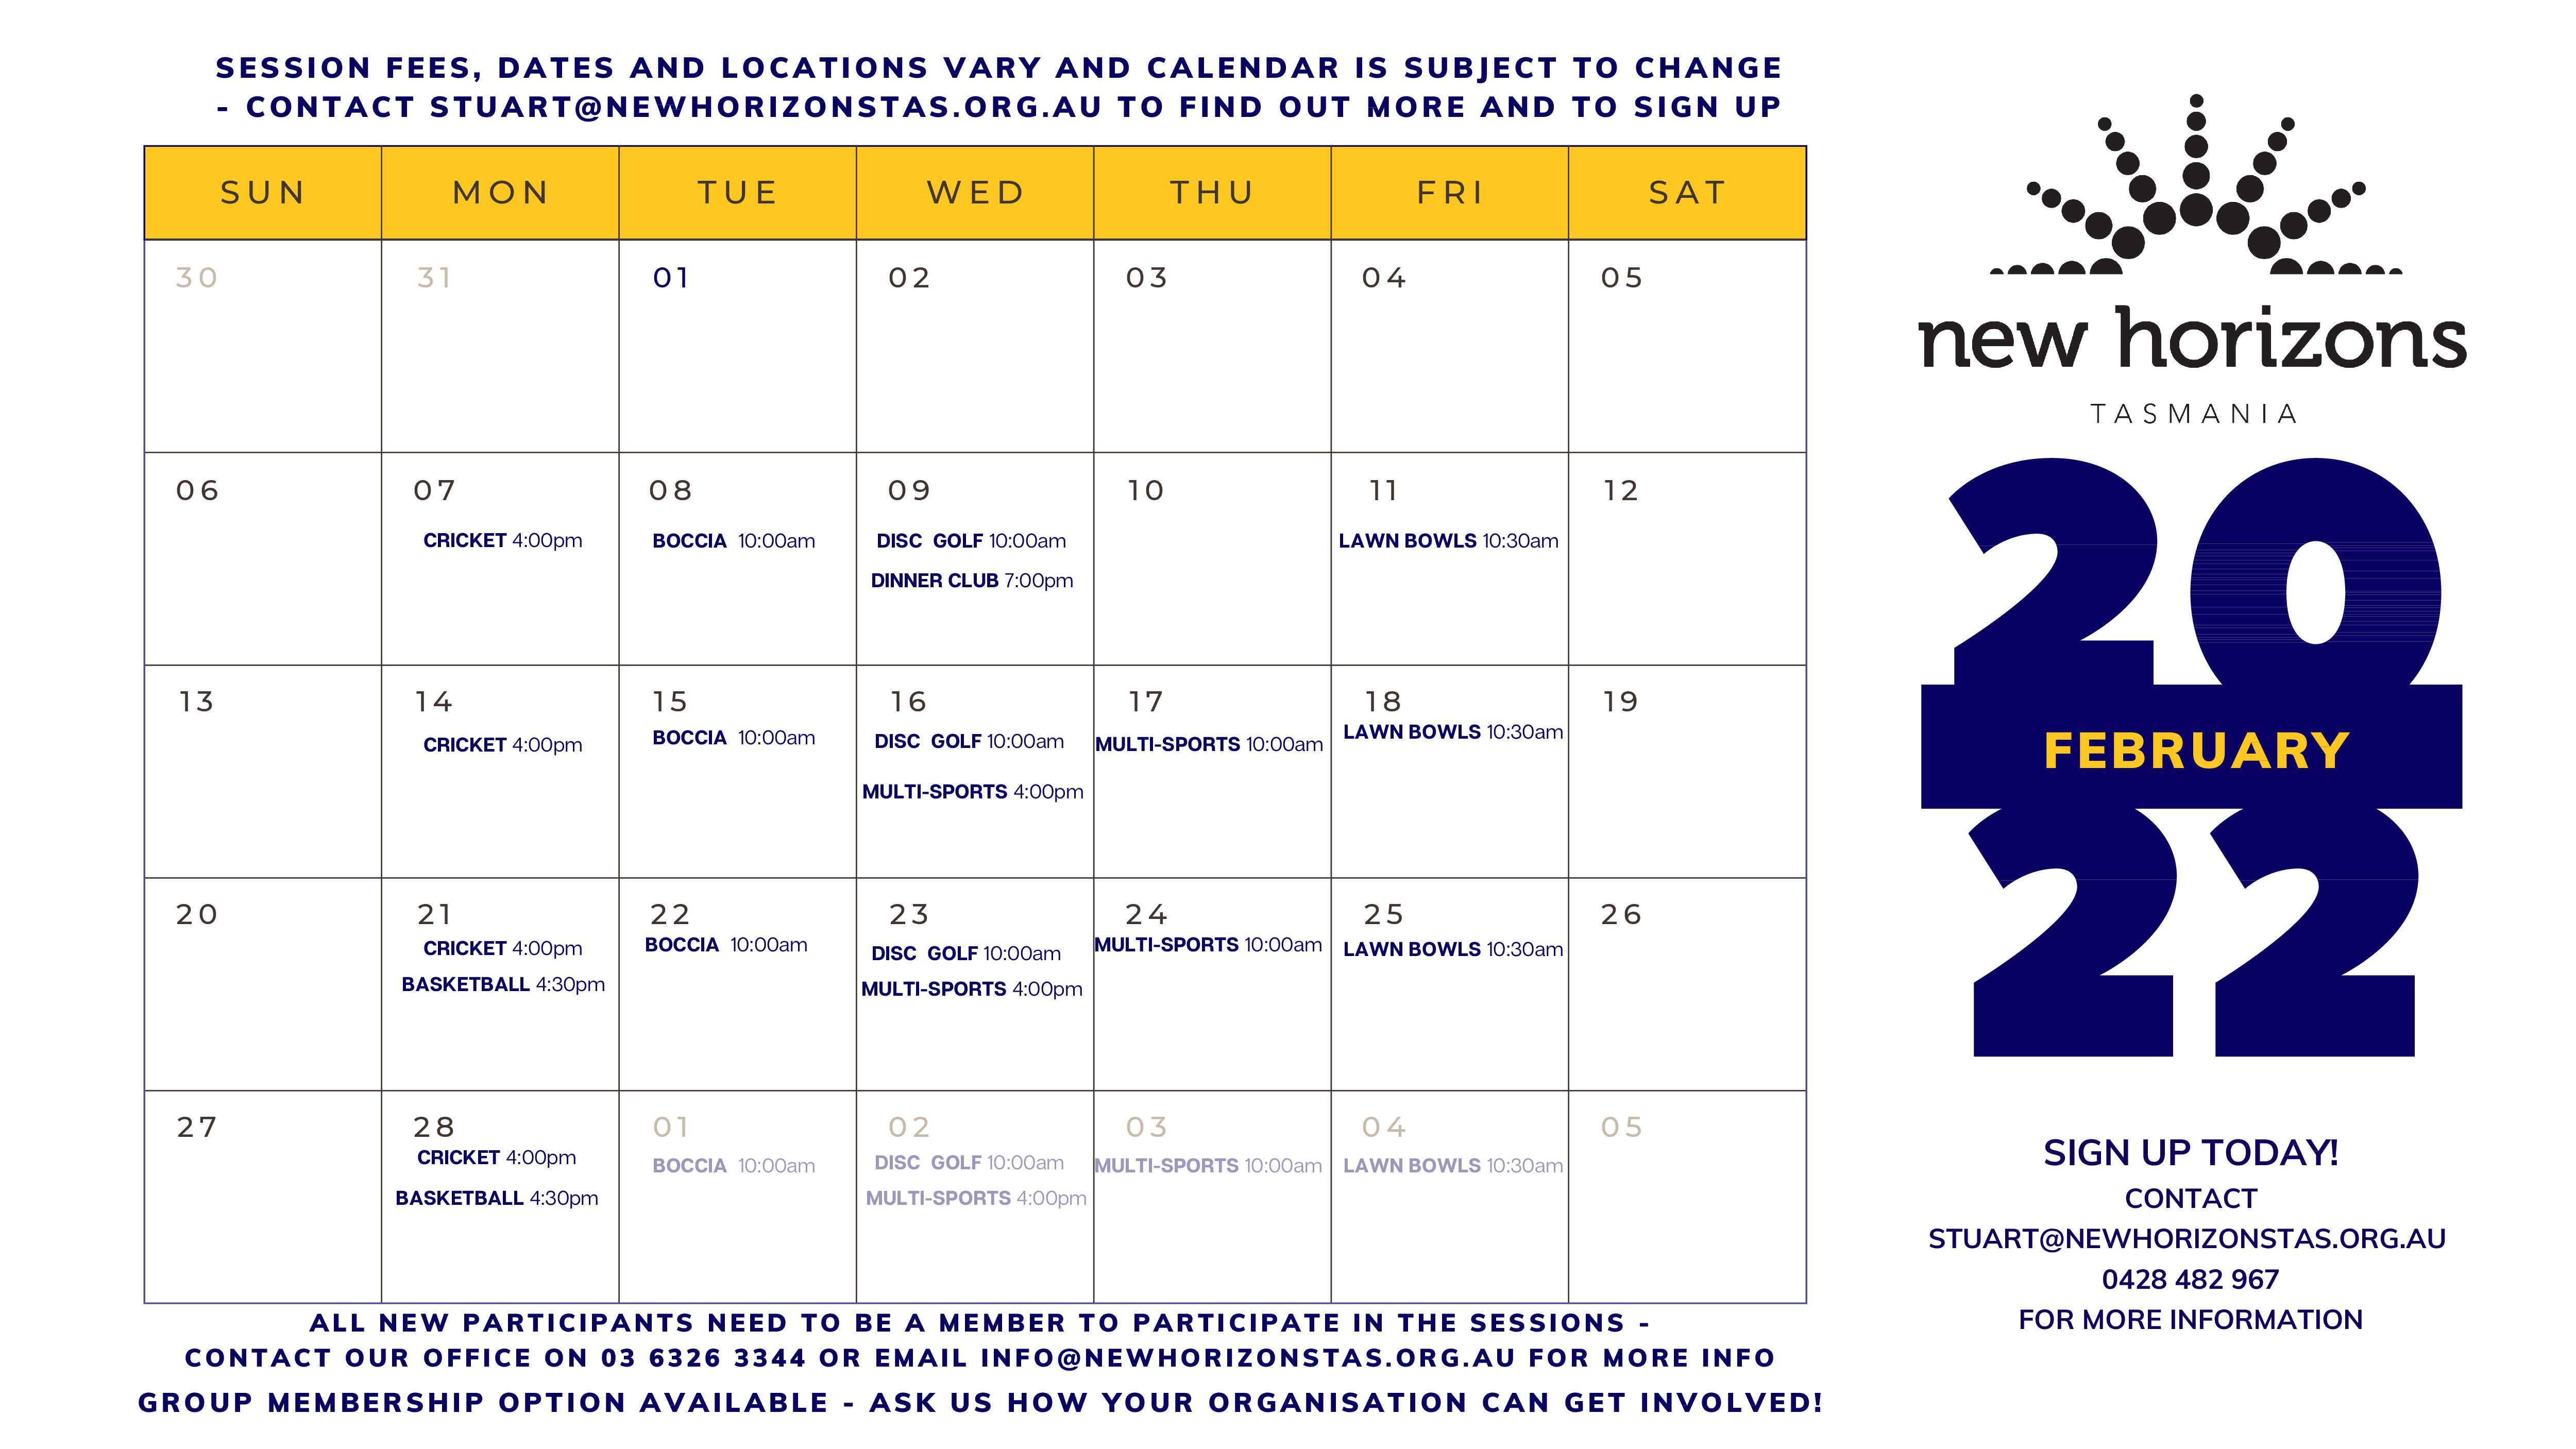 New Horizons Southern 2022 Calendar - February